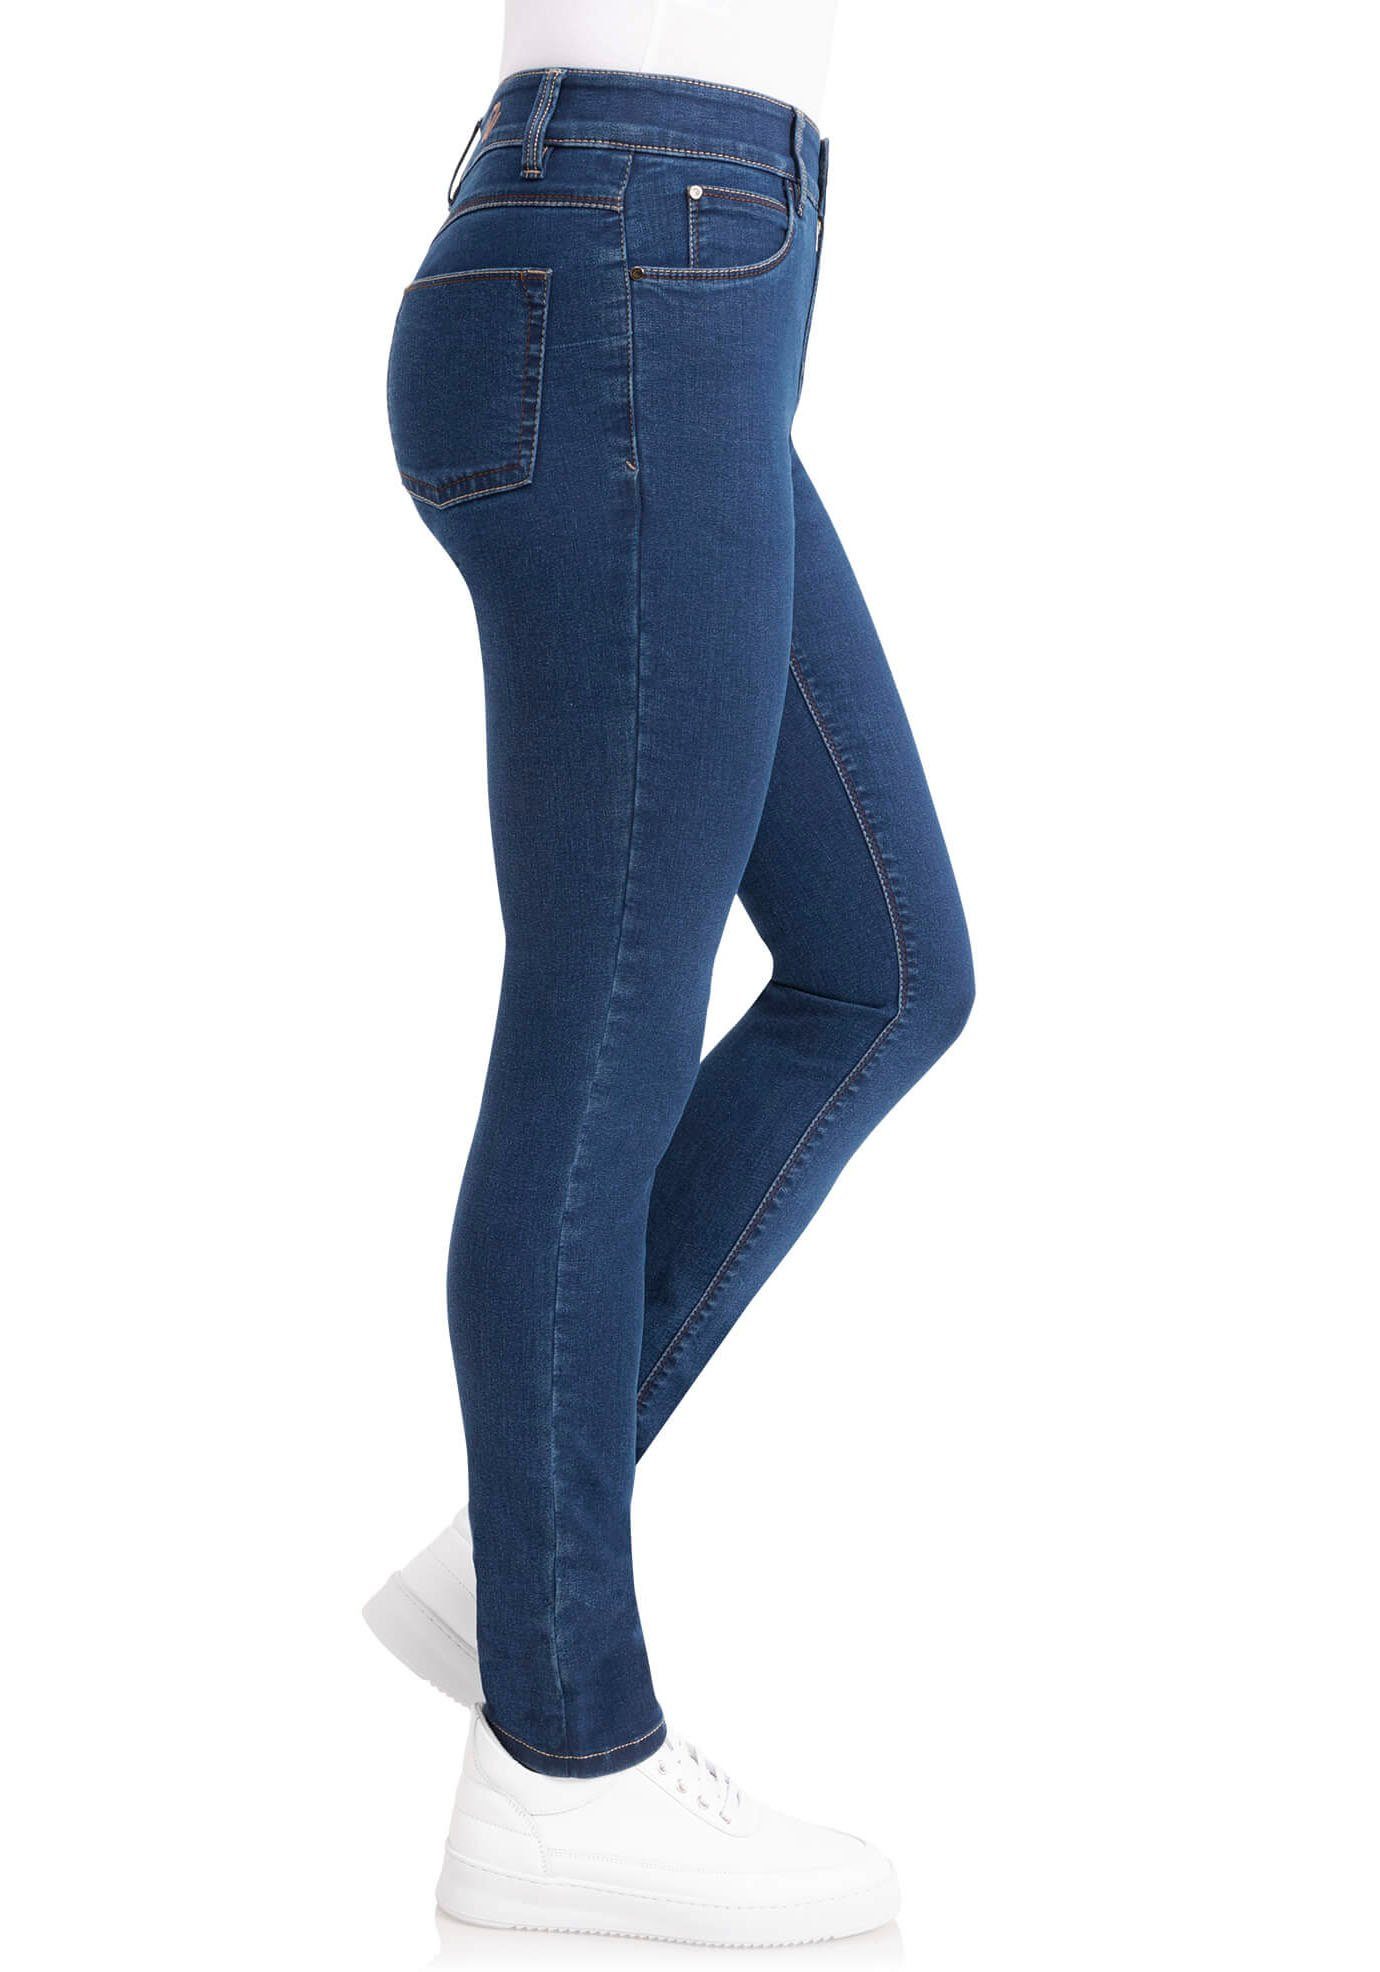 wonderjeans Slim-fit-Jeans washed blue Schnitt gerader stone Classic-Slim Klassischer